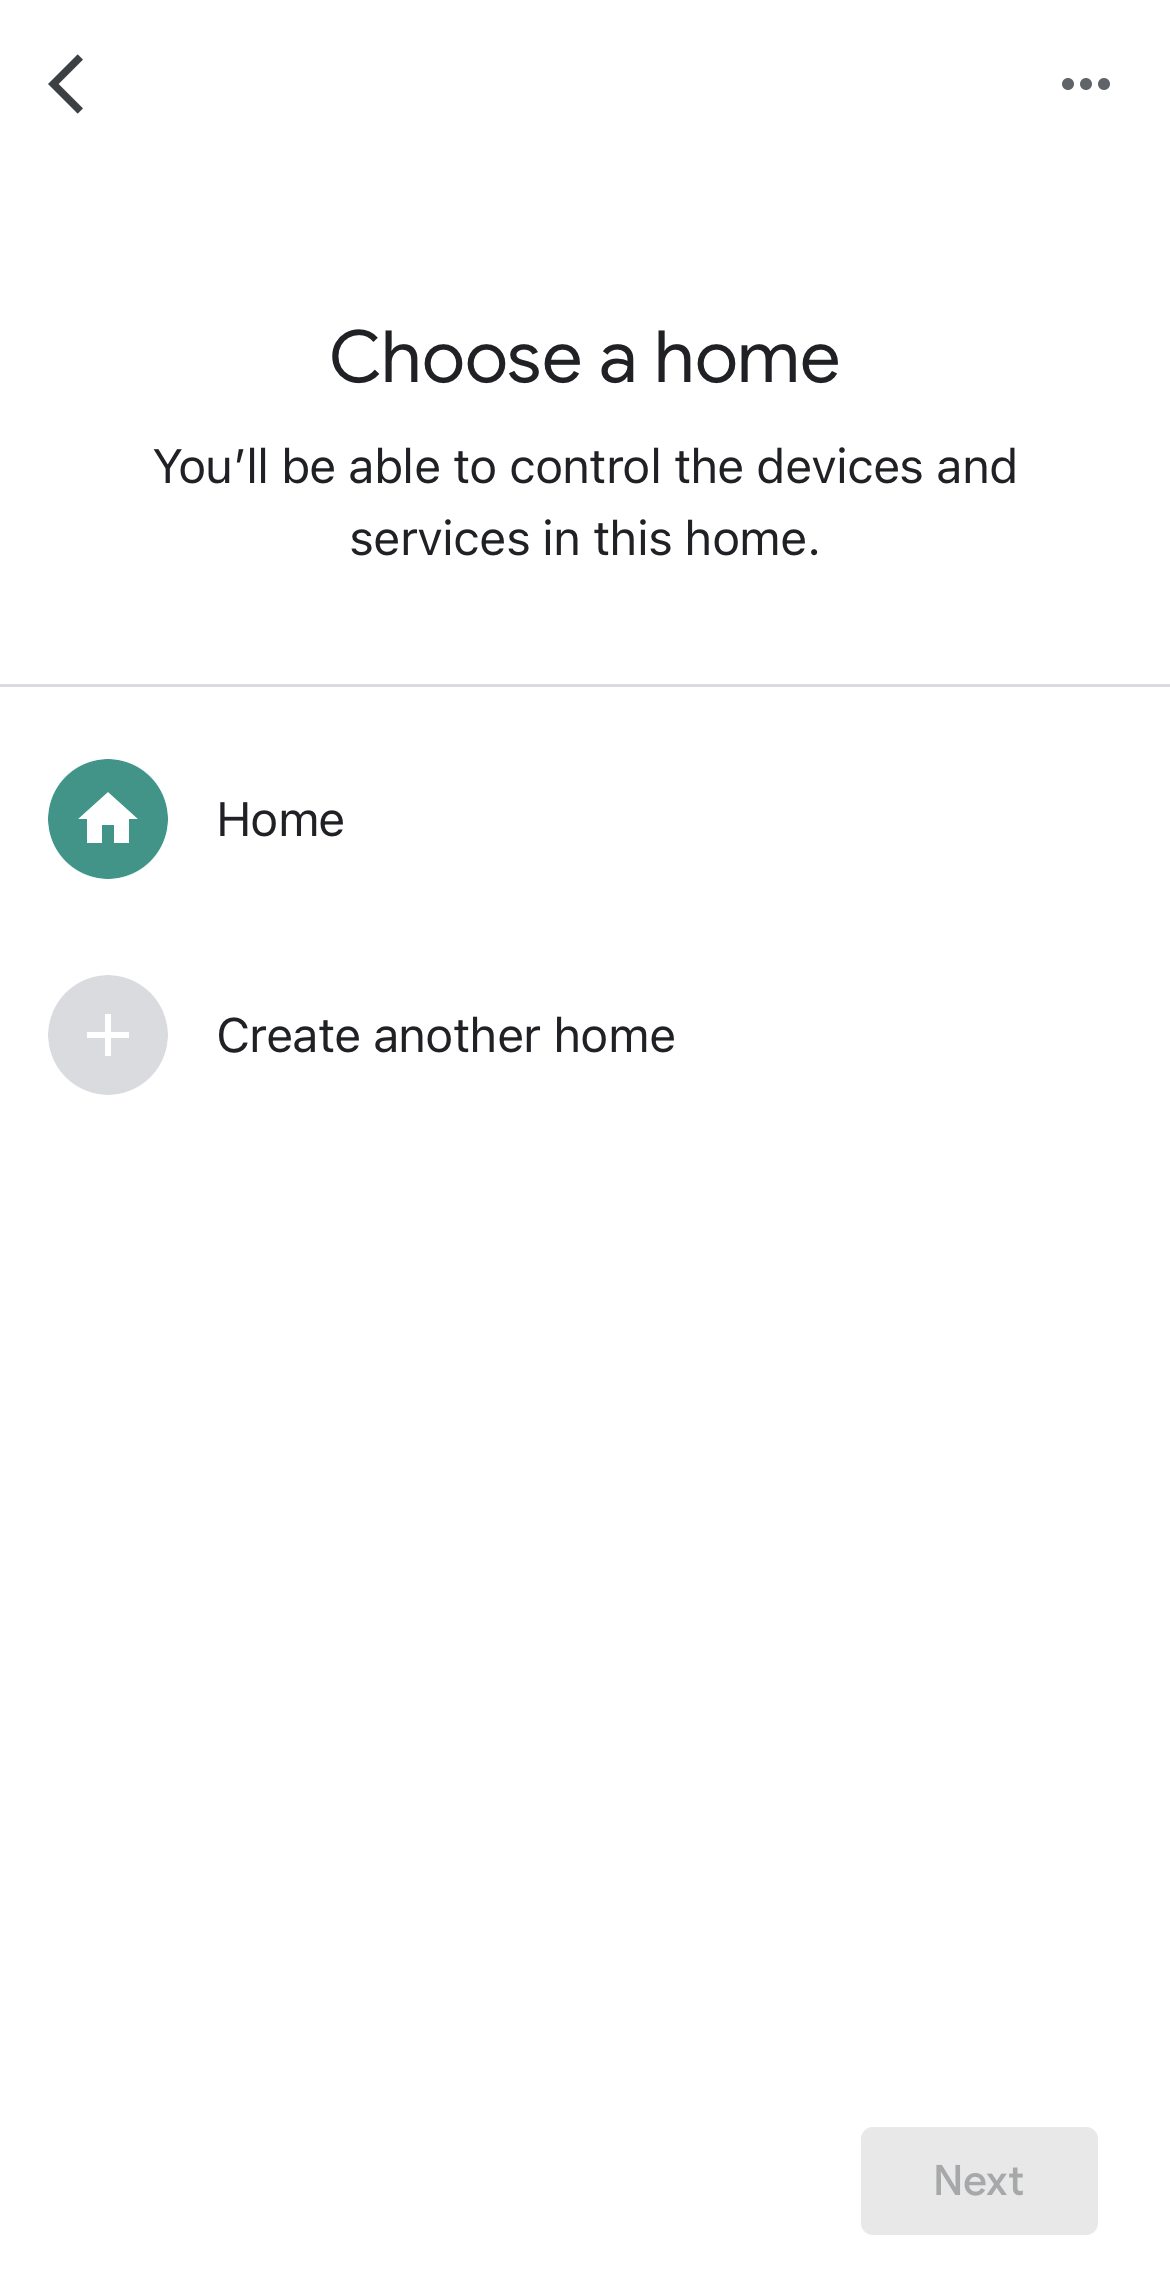 Choosing a Home on Google Home